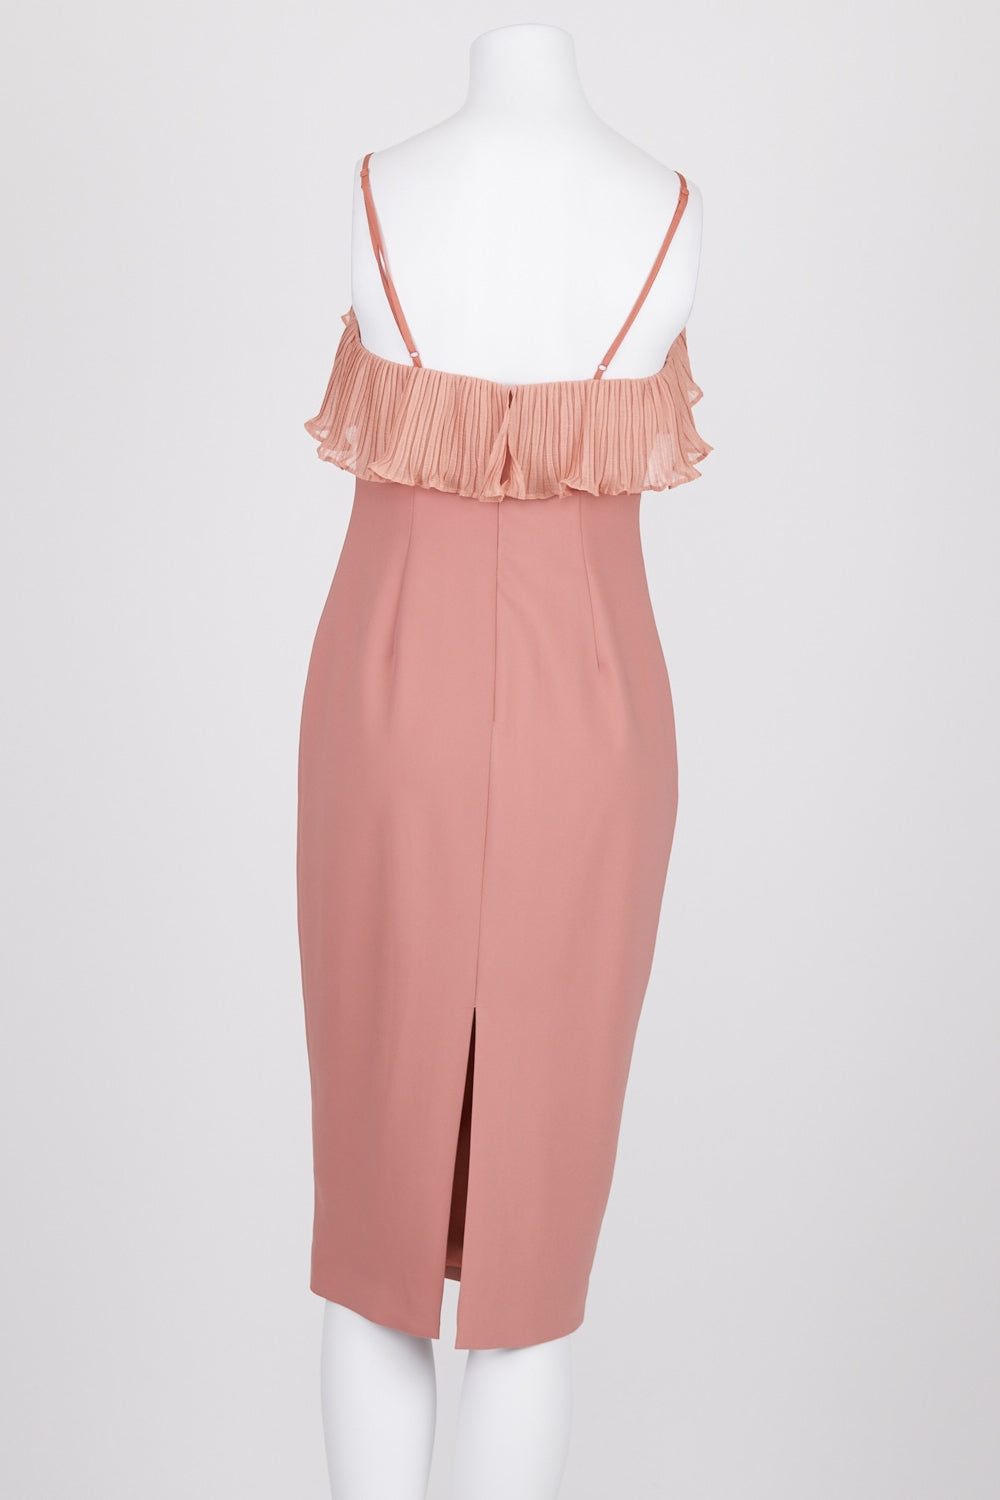 Talulah Pink Midi Dress S